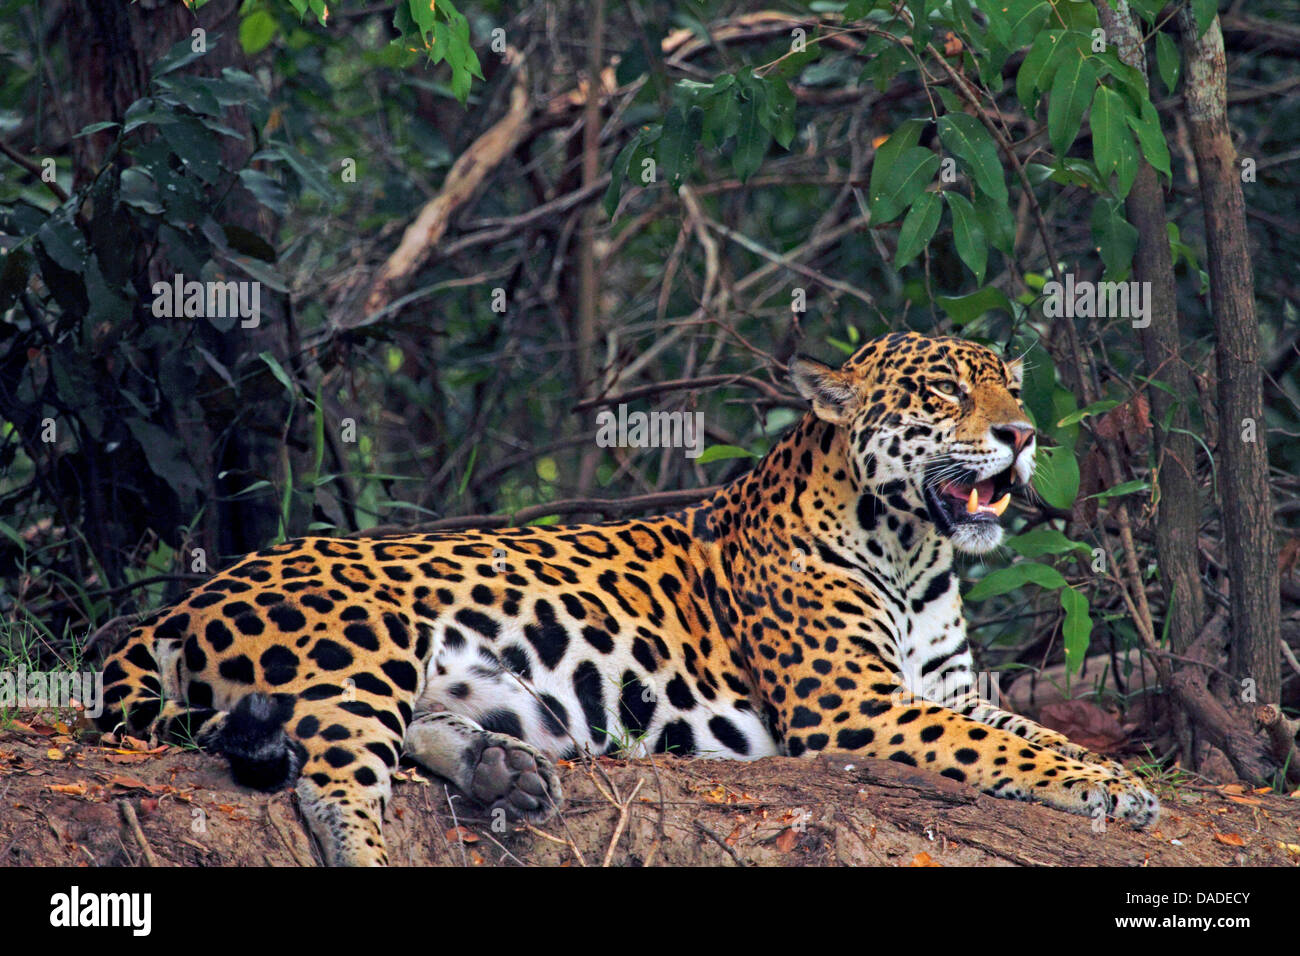 Jaguar (Panthera onca), el macho en el banco de arena, el bostezo, el Brasil, el Pantanal, río Cuiaba Foto de stock